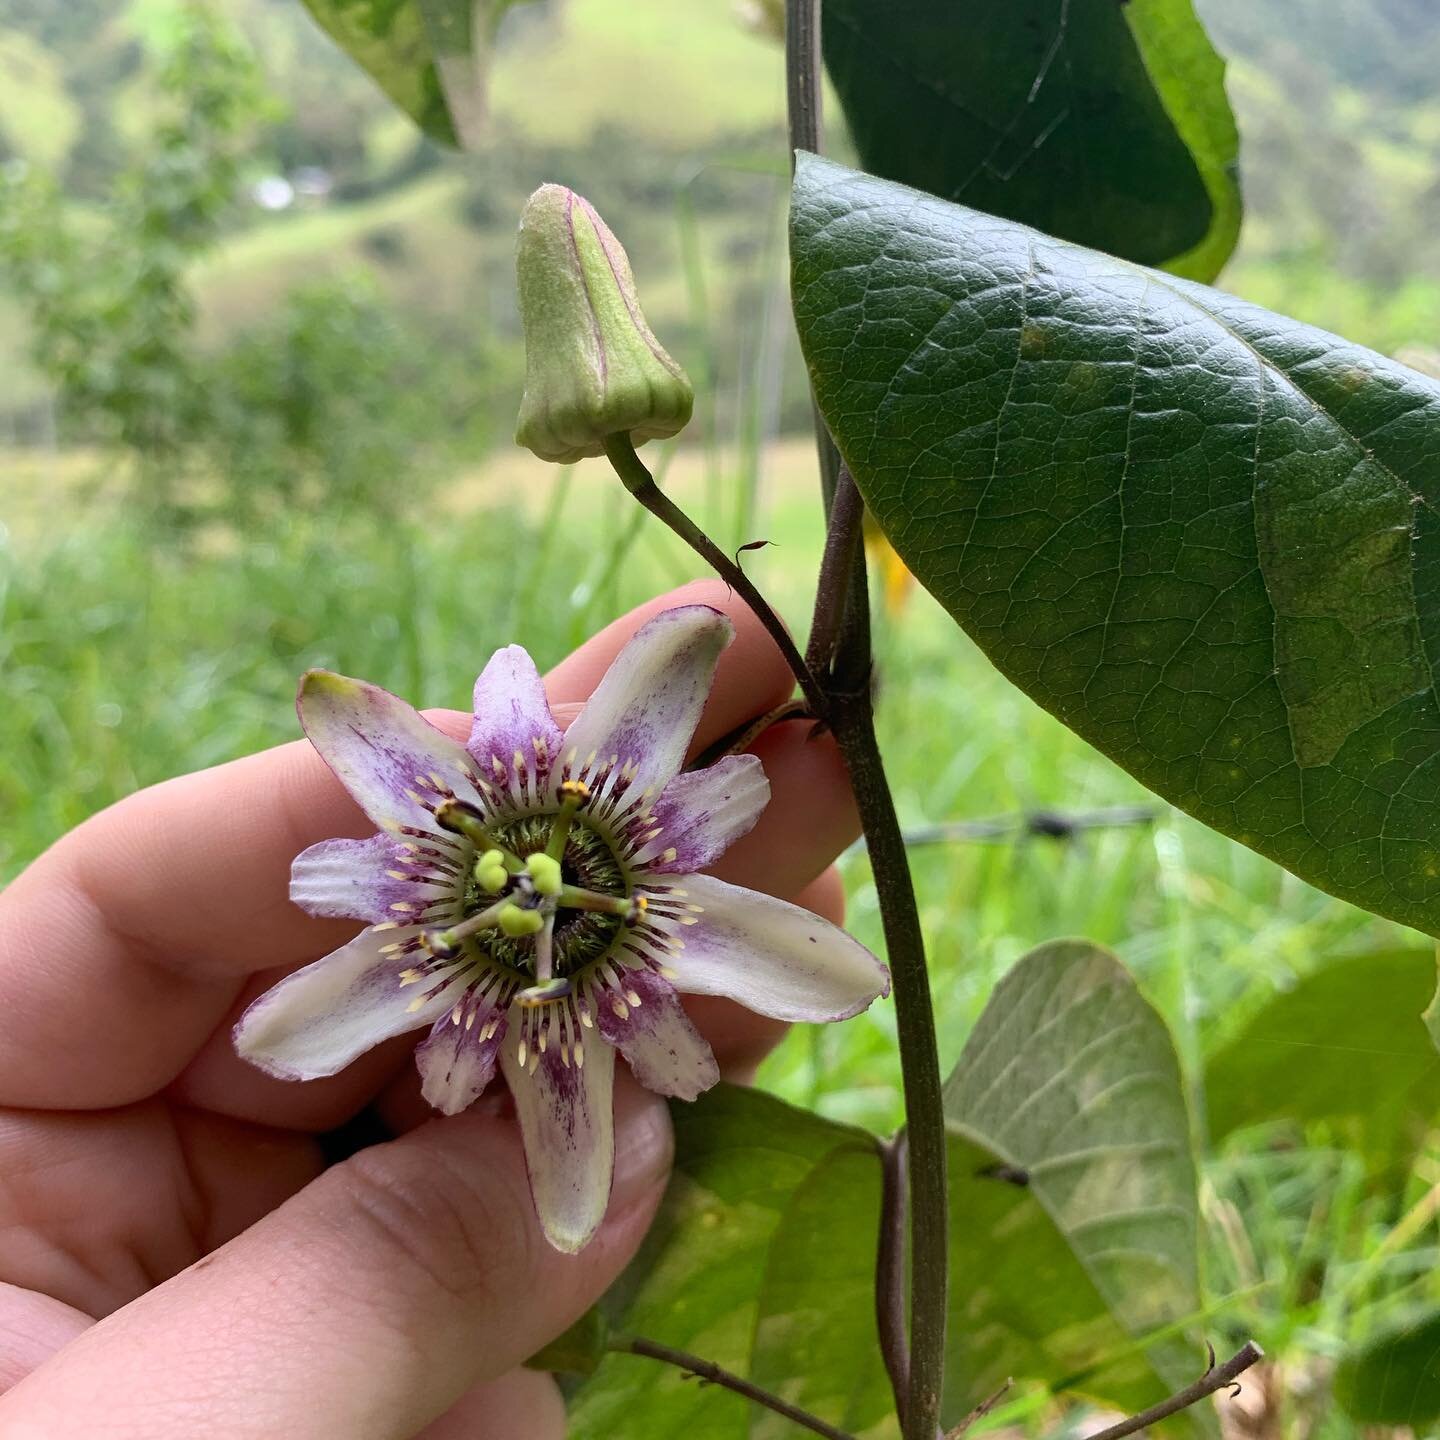 Passiflora alnifolia growing wild in Colombia
.
.
.
.
.
.
#passiflora #passifloraalnifolia #colombia #colombia🇨🇴 #botany #botanizing #botanica #flor #silvestre